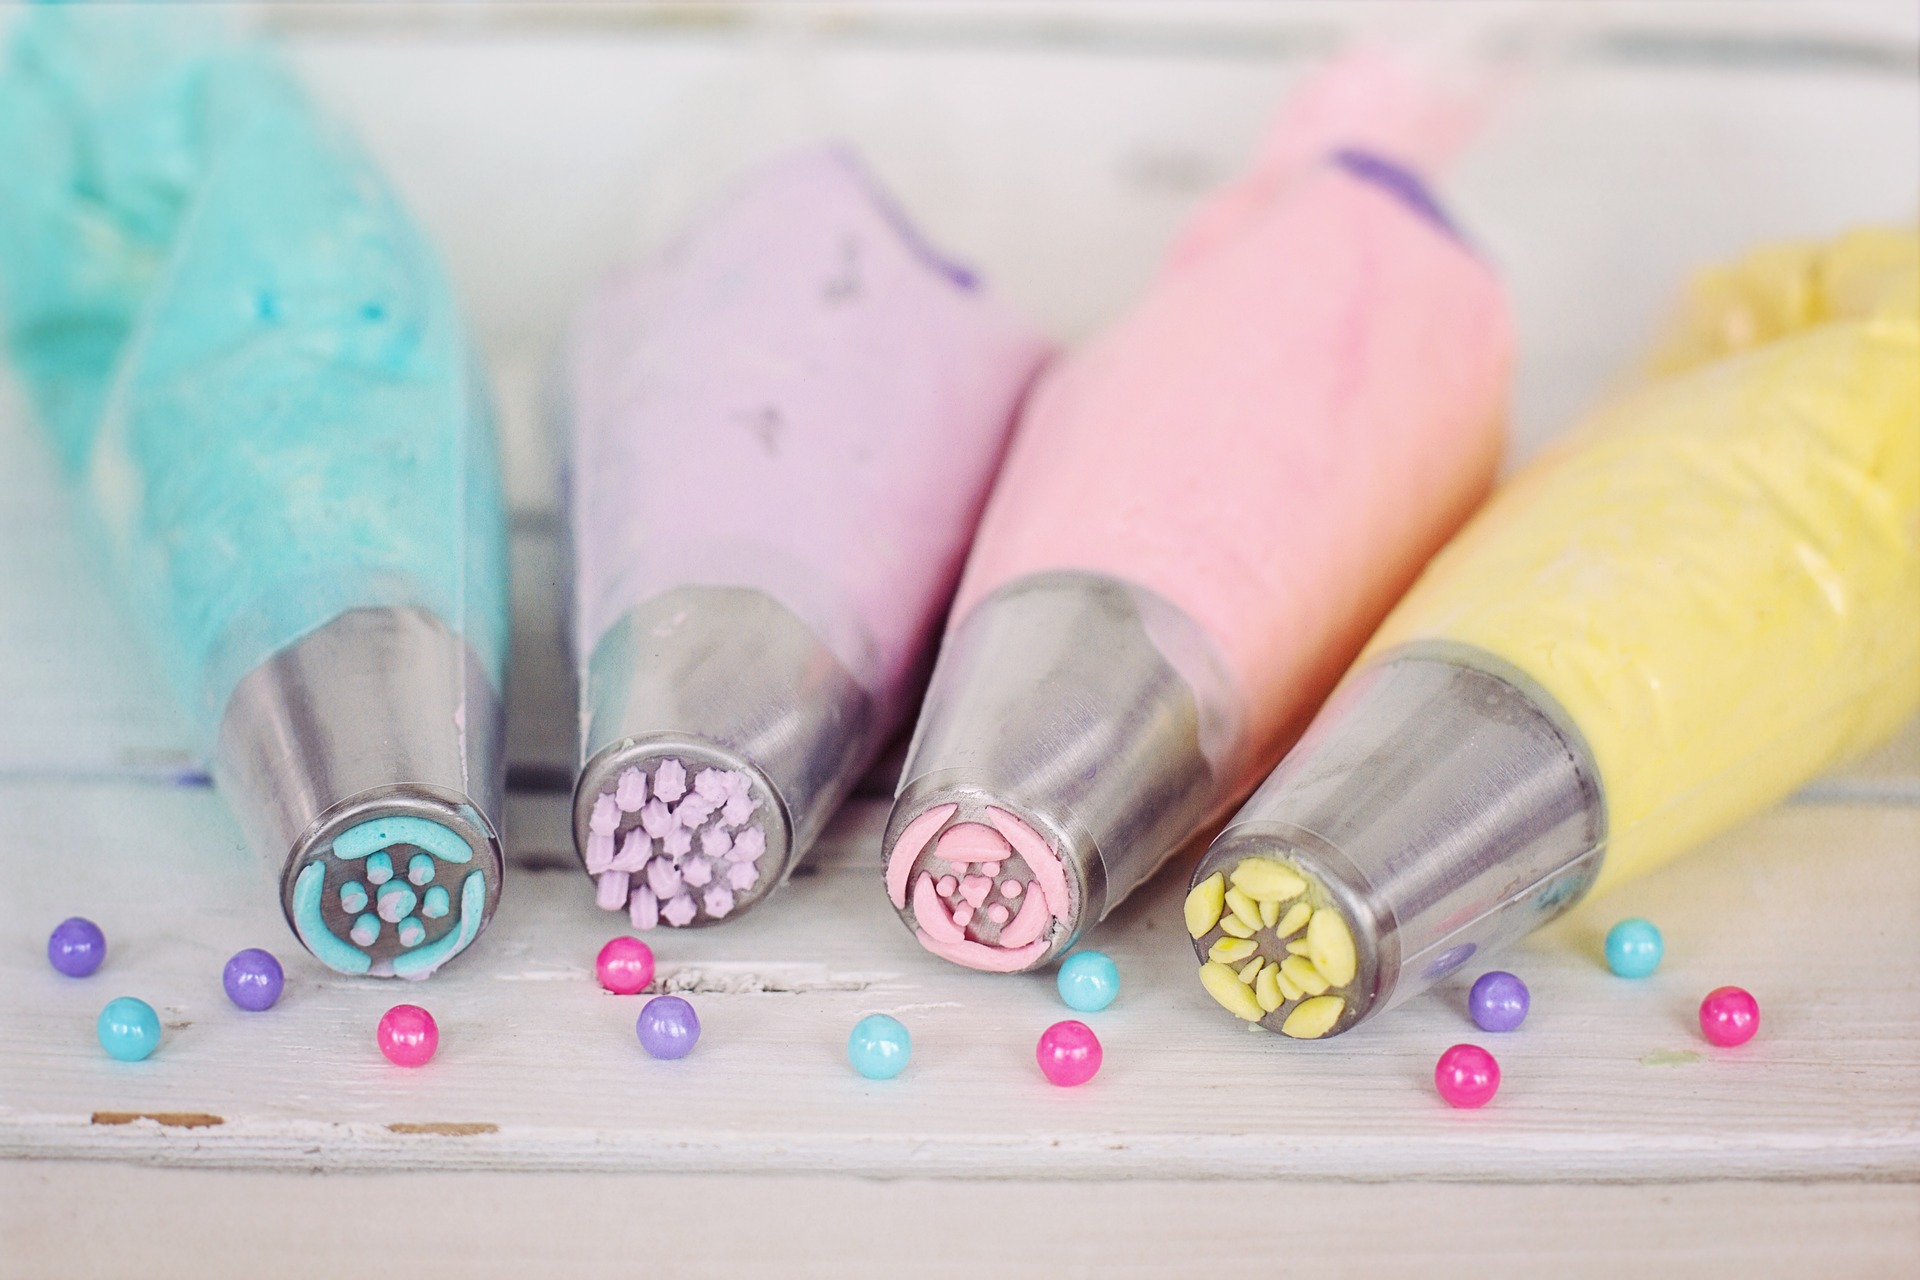 Bakery design frosting applicators in pastel colors